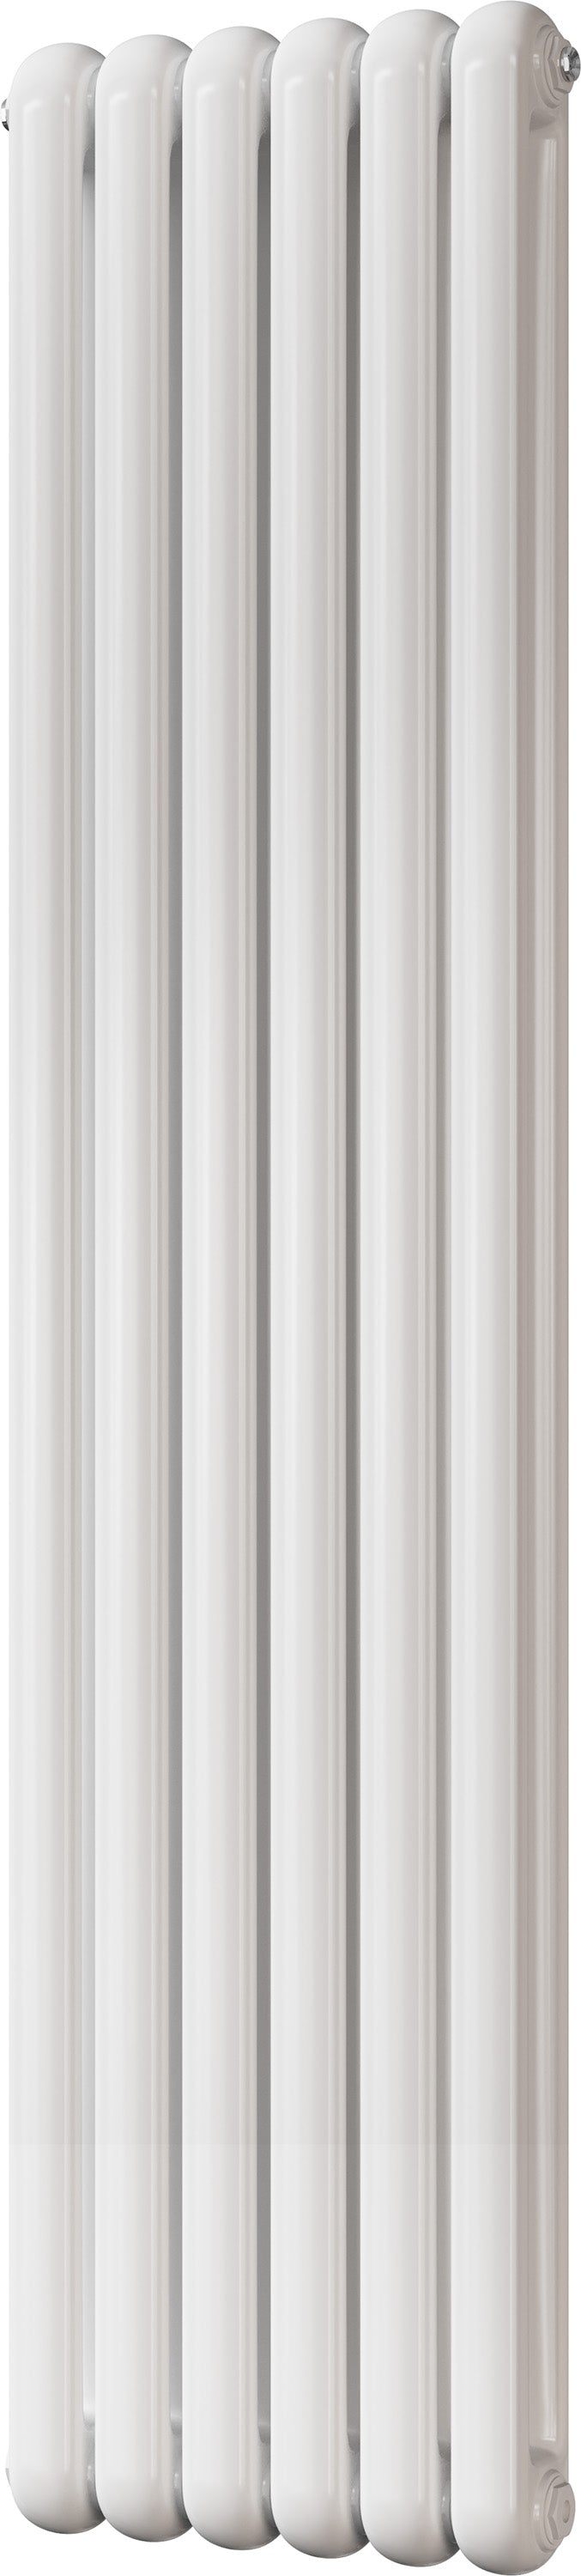 Sherwood - White Vertical Round Top Column Radiator H1800mm x W437mm 2 Column